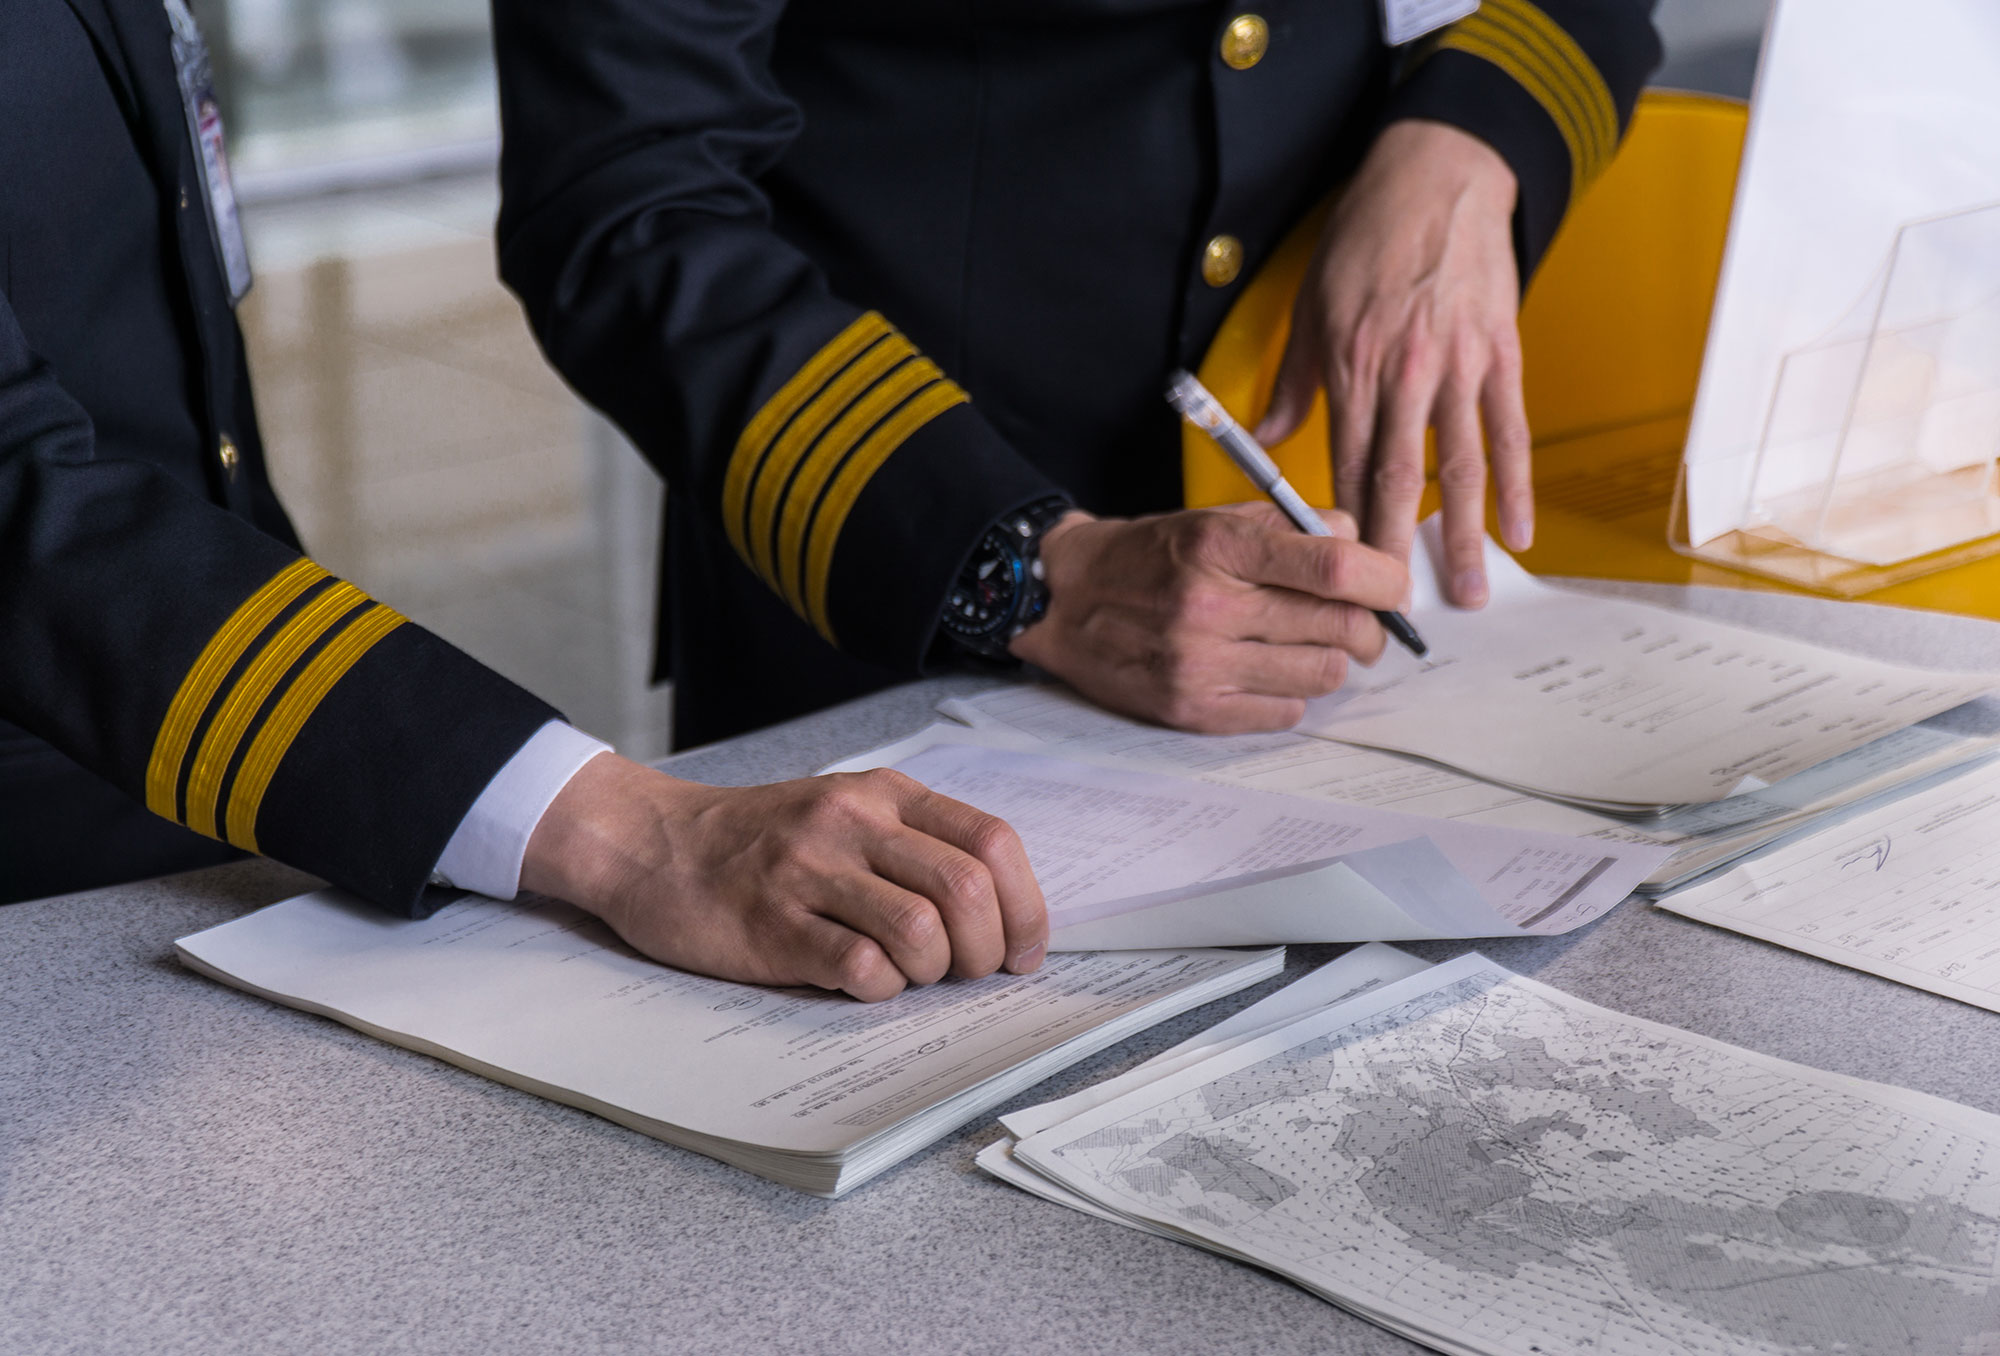 Pilots reviewing documents